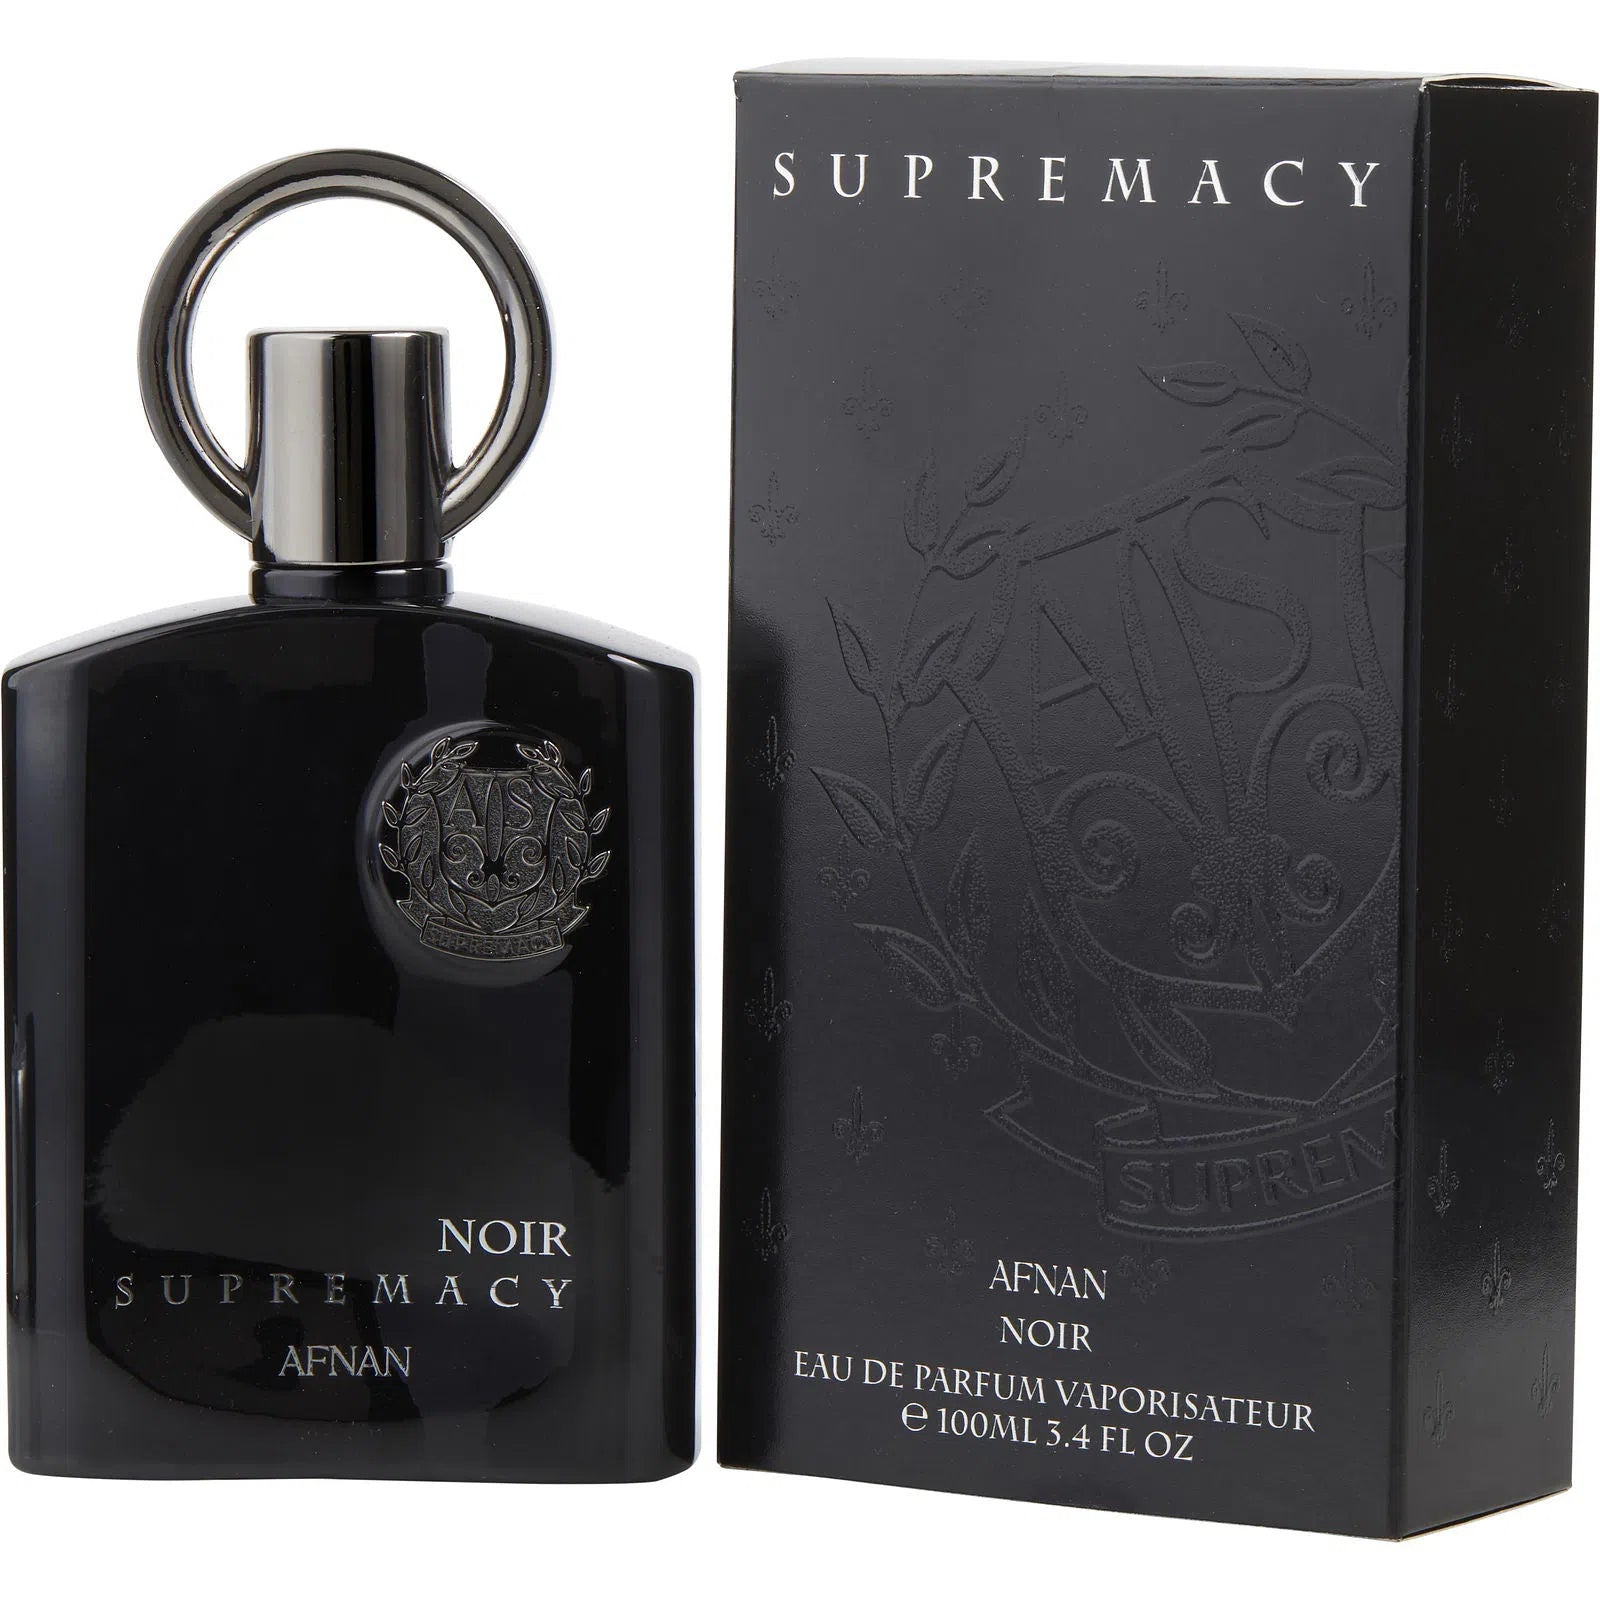 Perfume Afnan Supremacy Noir EDP (U) / 100 ml - 6290171001614- Prive Perfumes Honduras